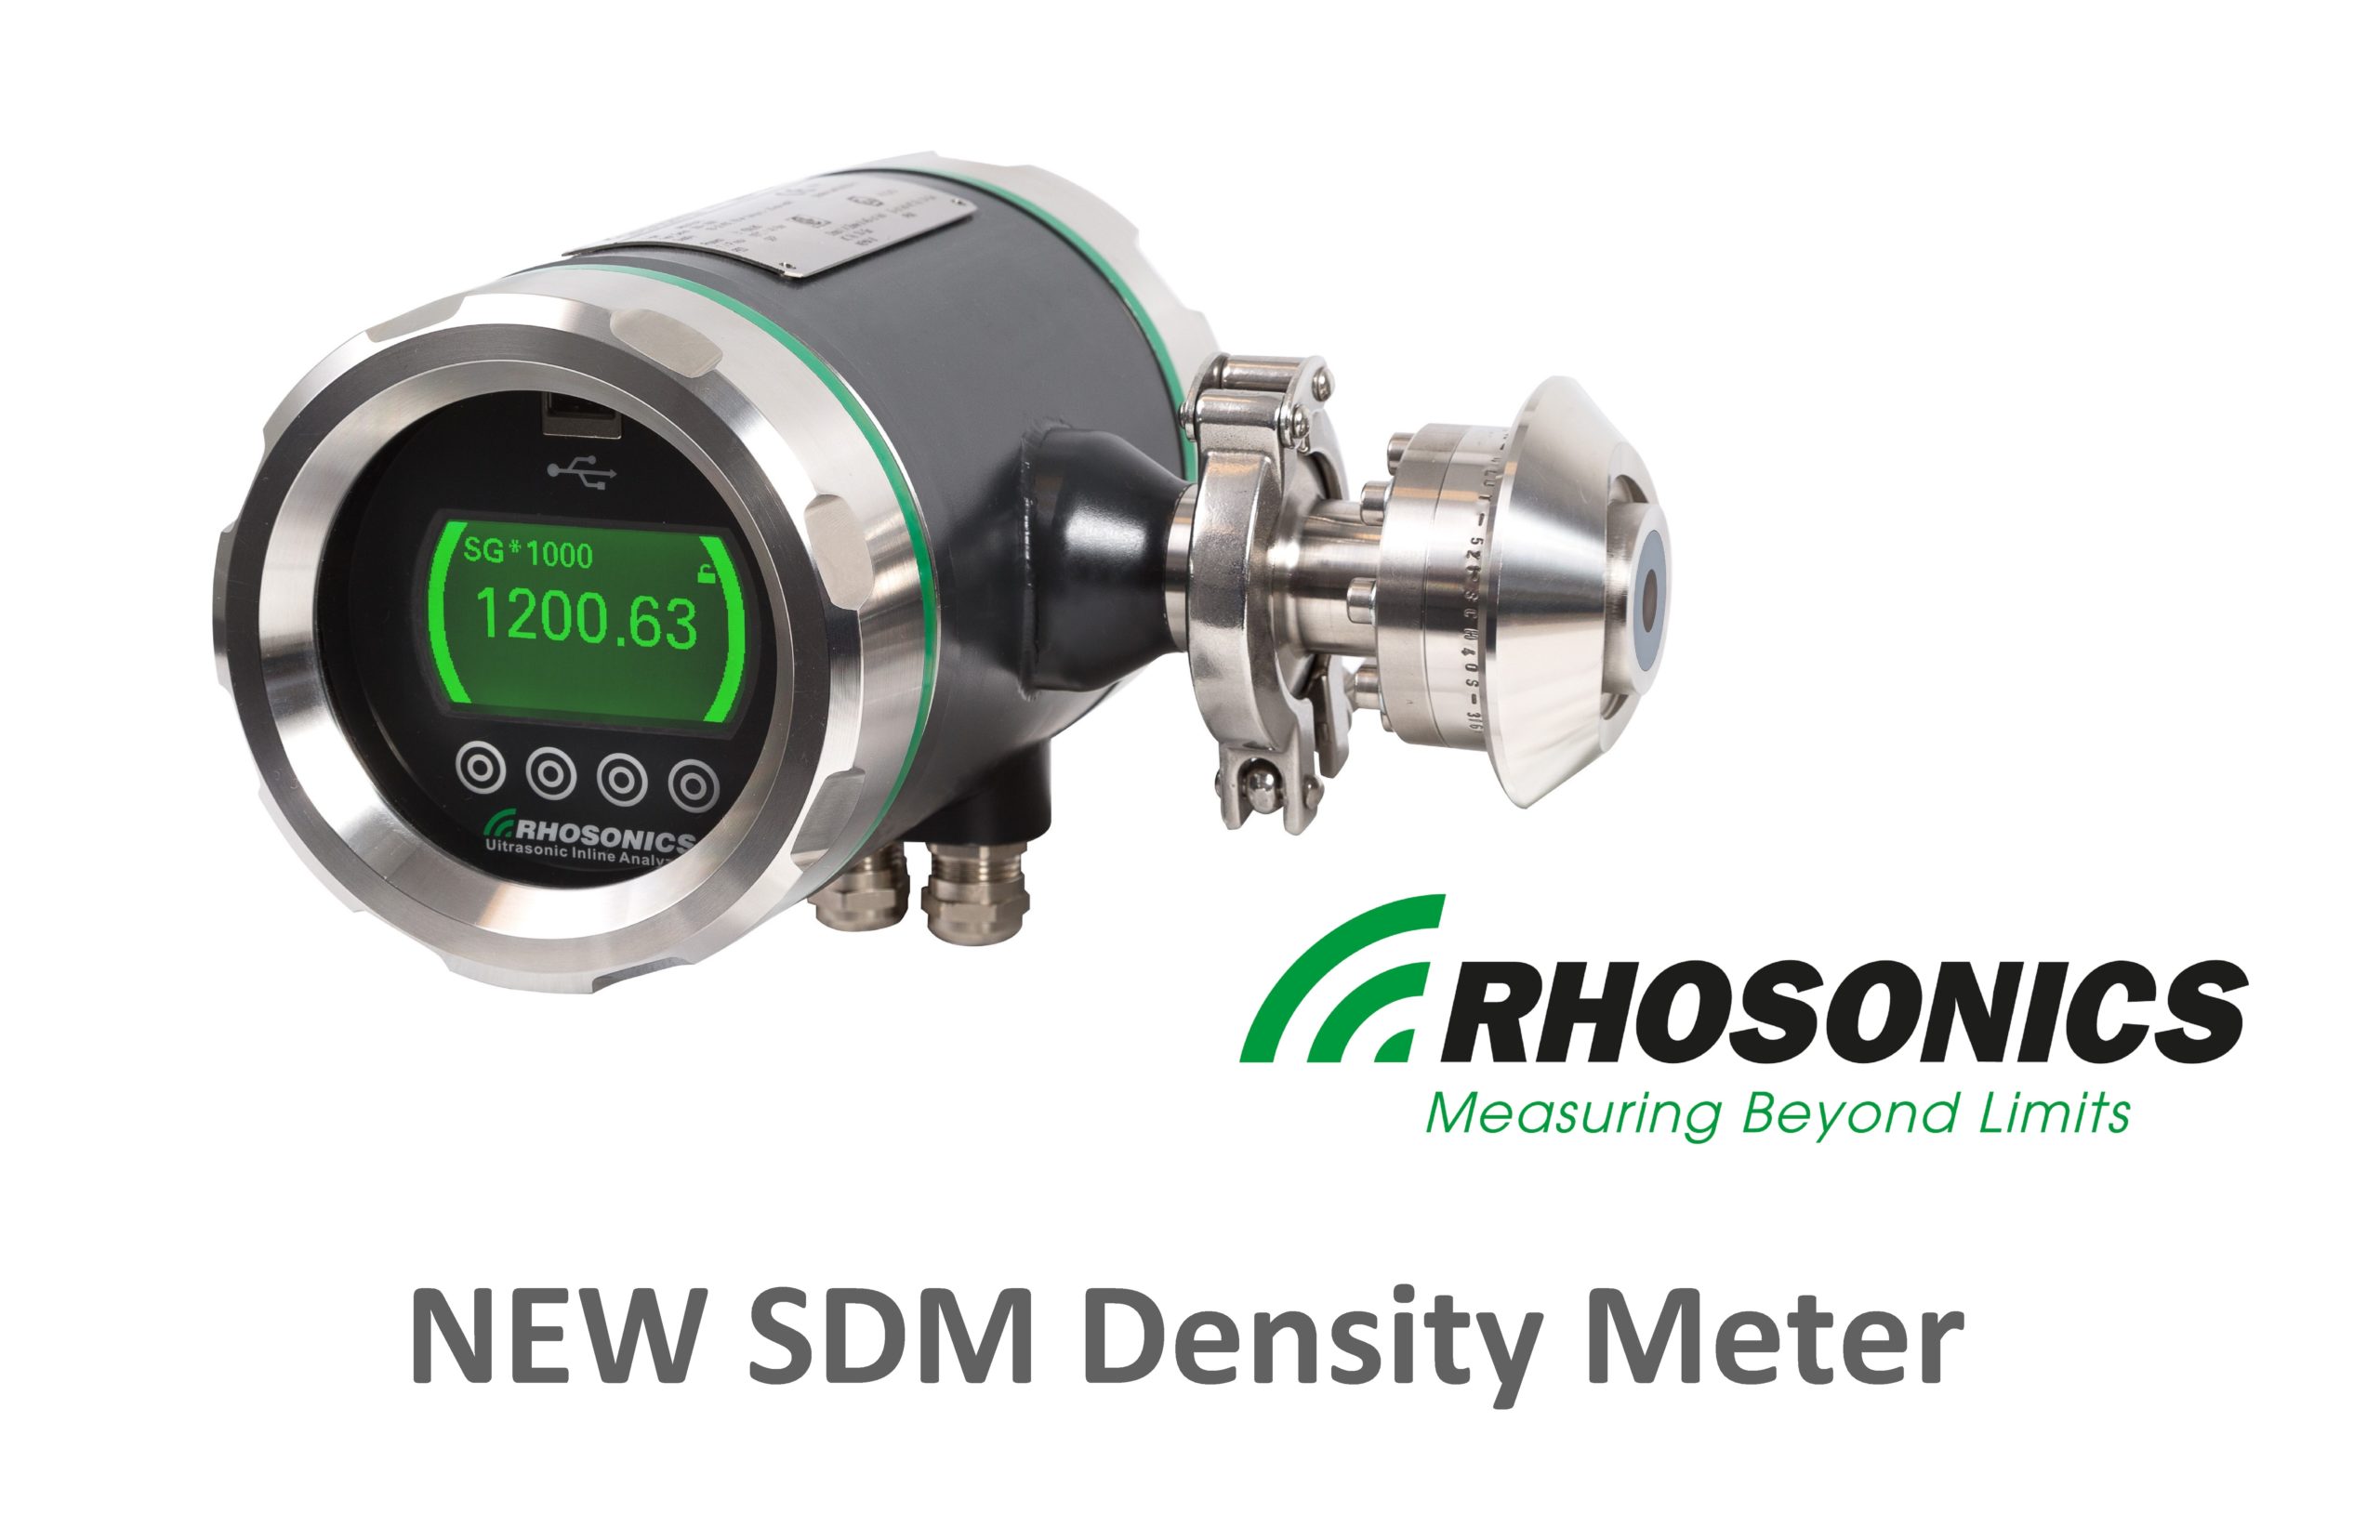 Rhosonics Launches The SDM Density Meter